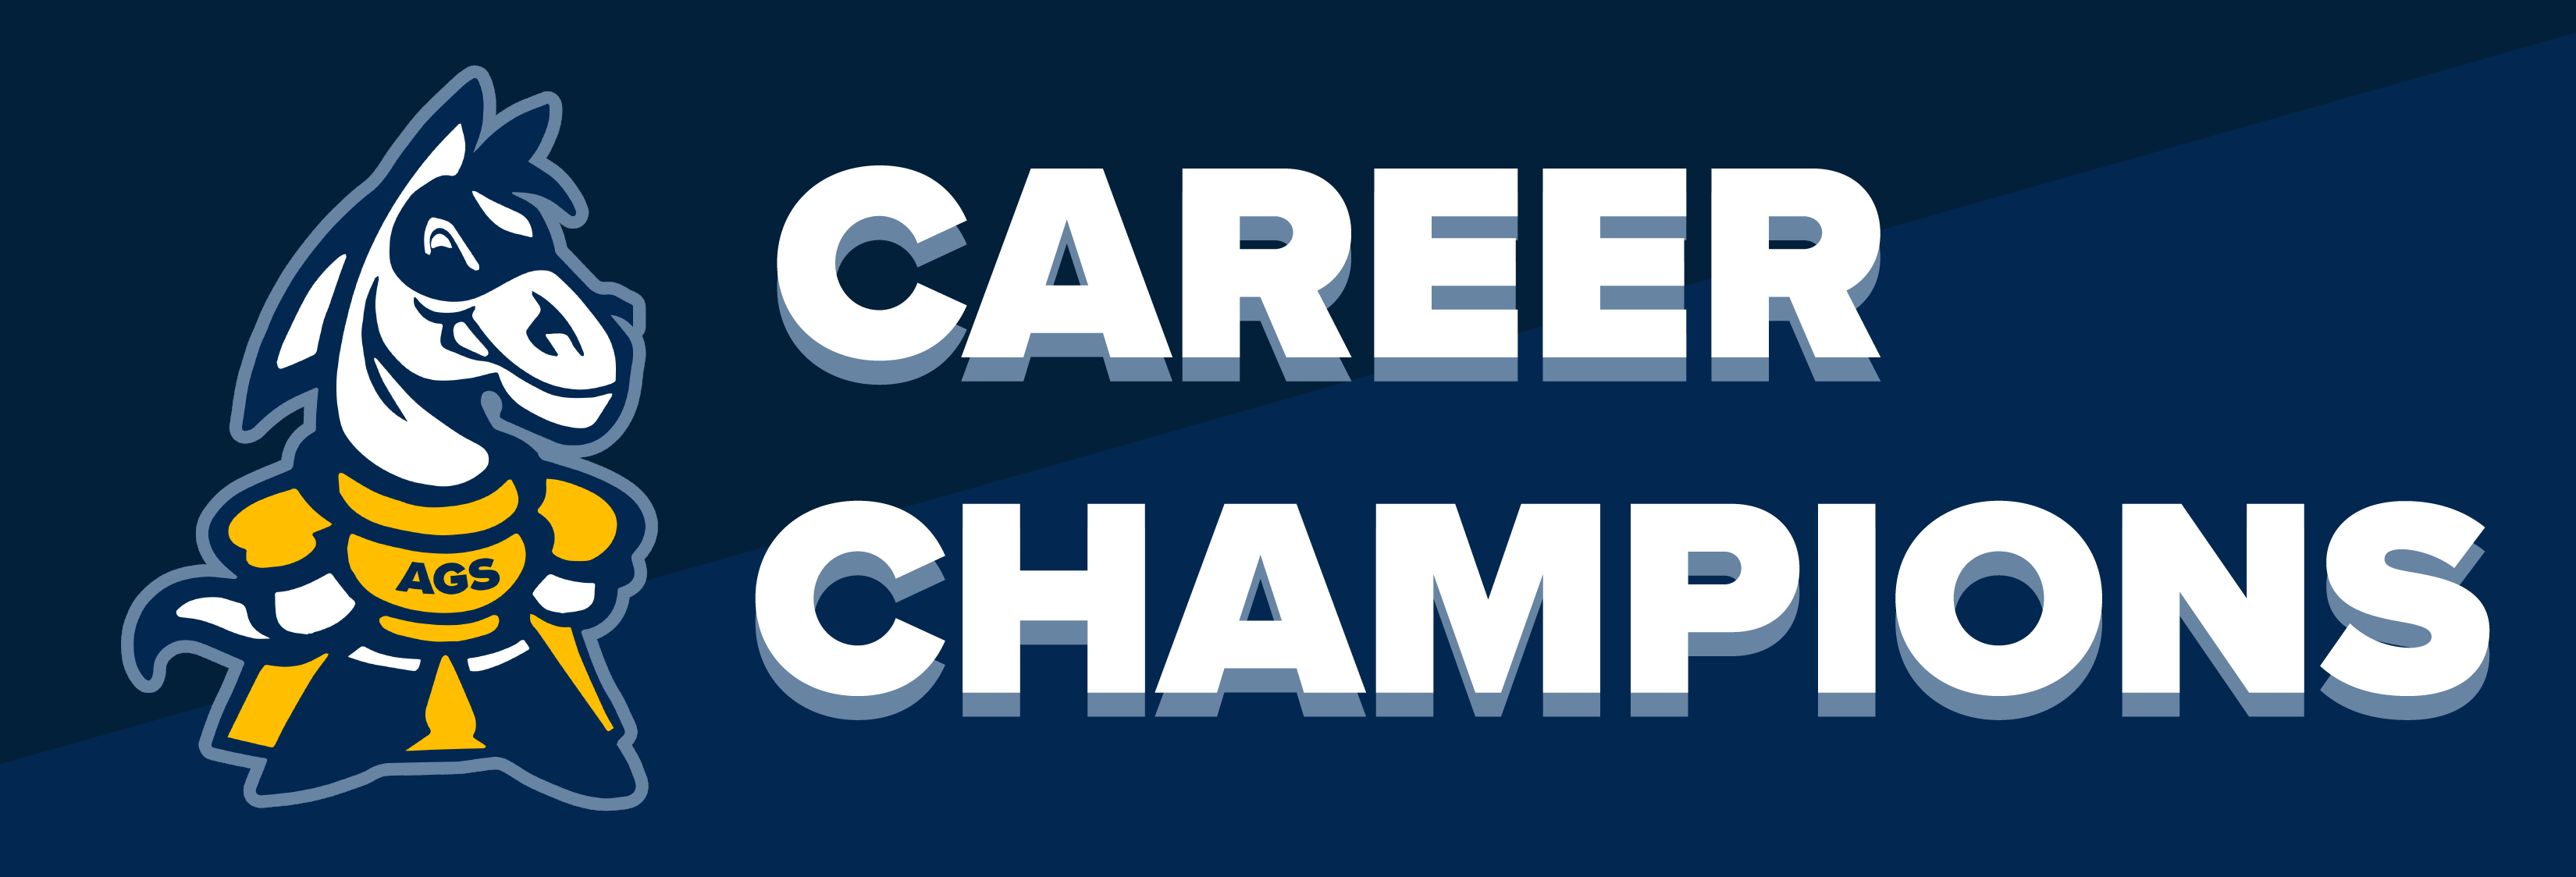 Career Champions banner